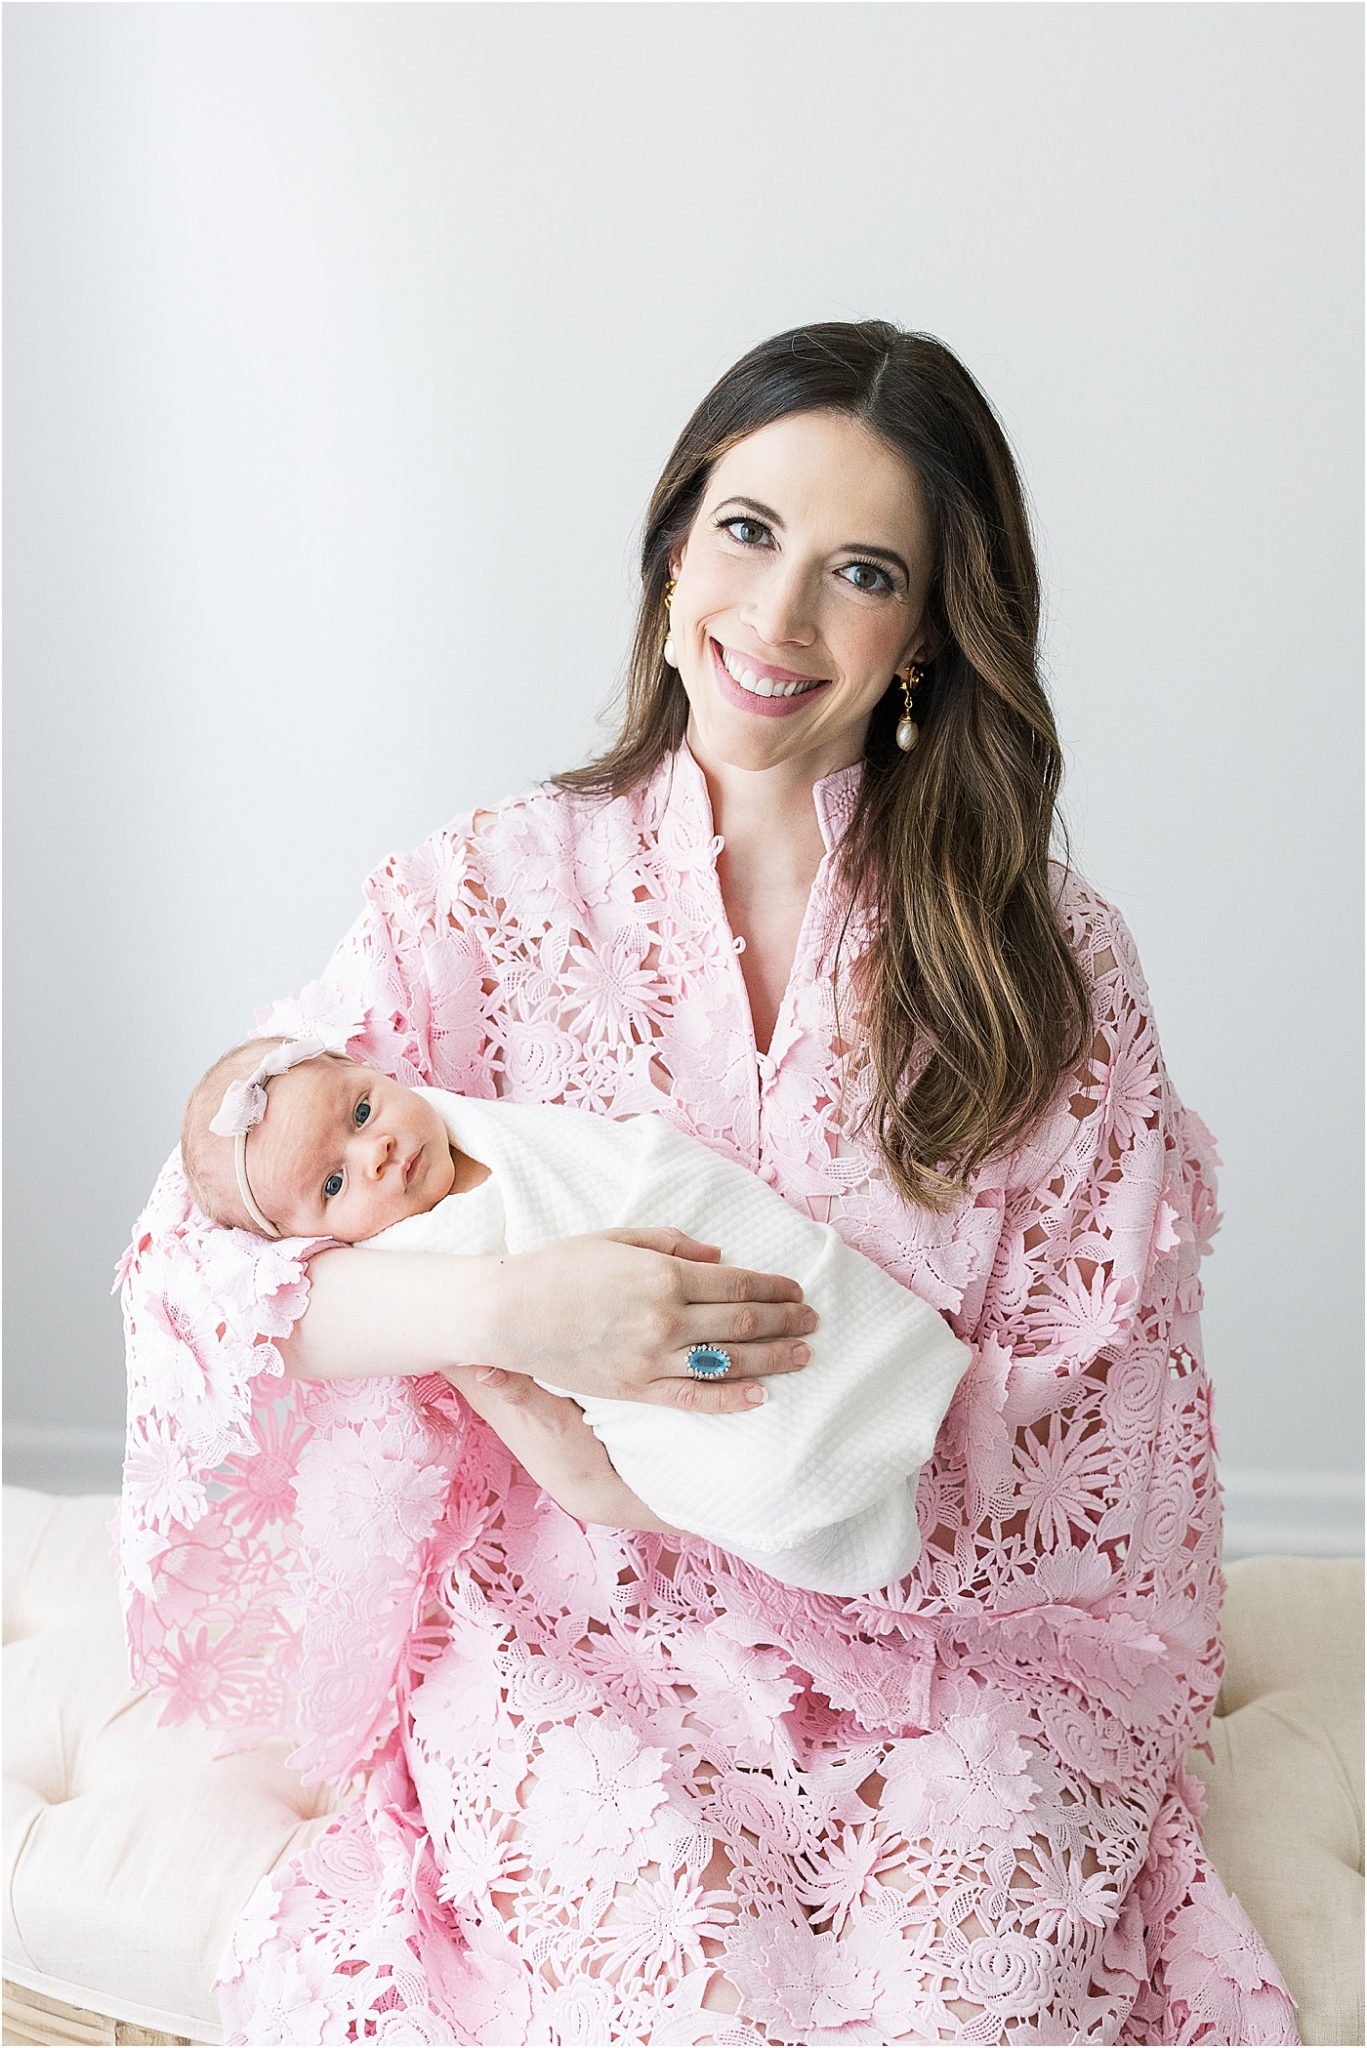 Mom and baby for photoshoot with Carmel newborn photographer, Lindsay Konopa Photography.